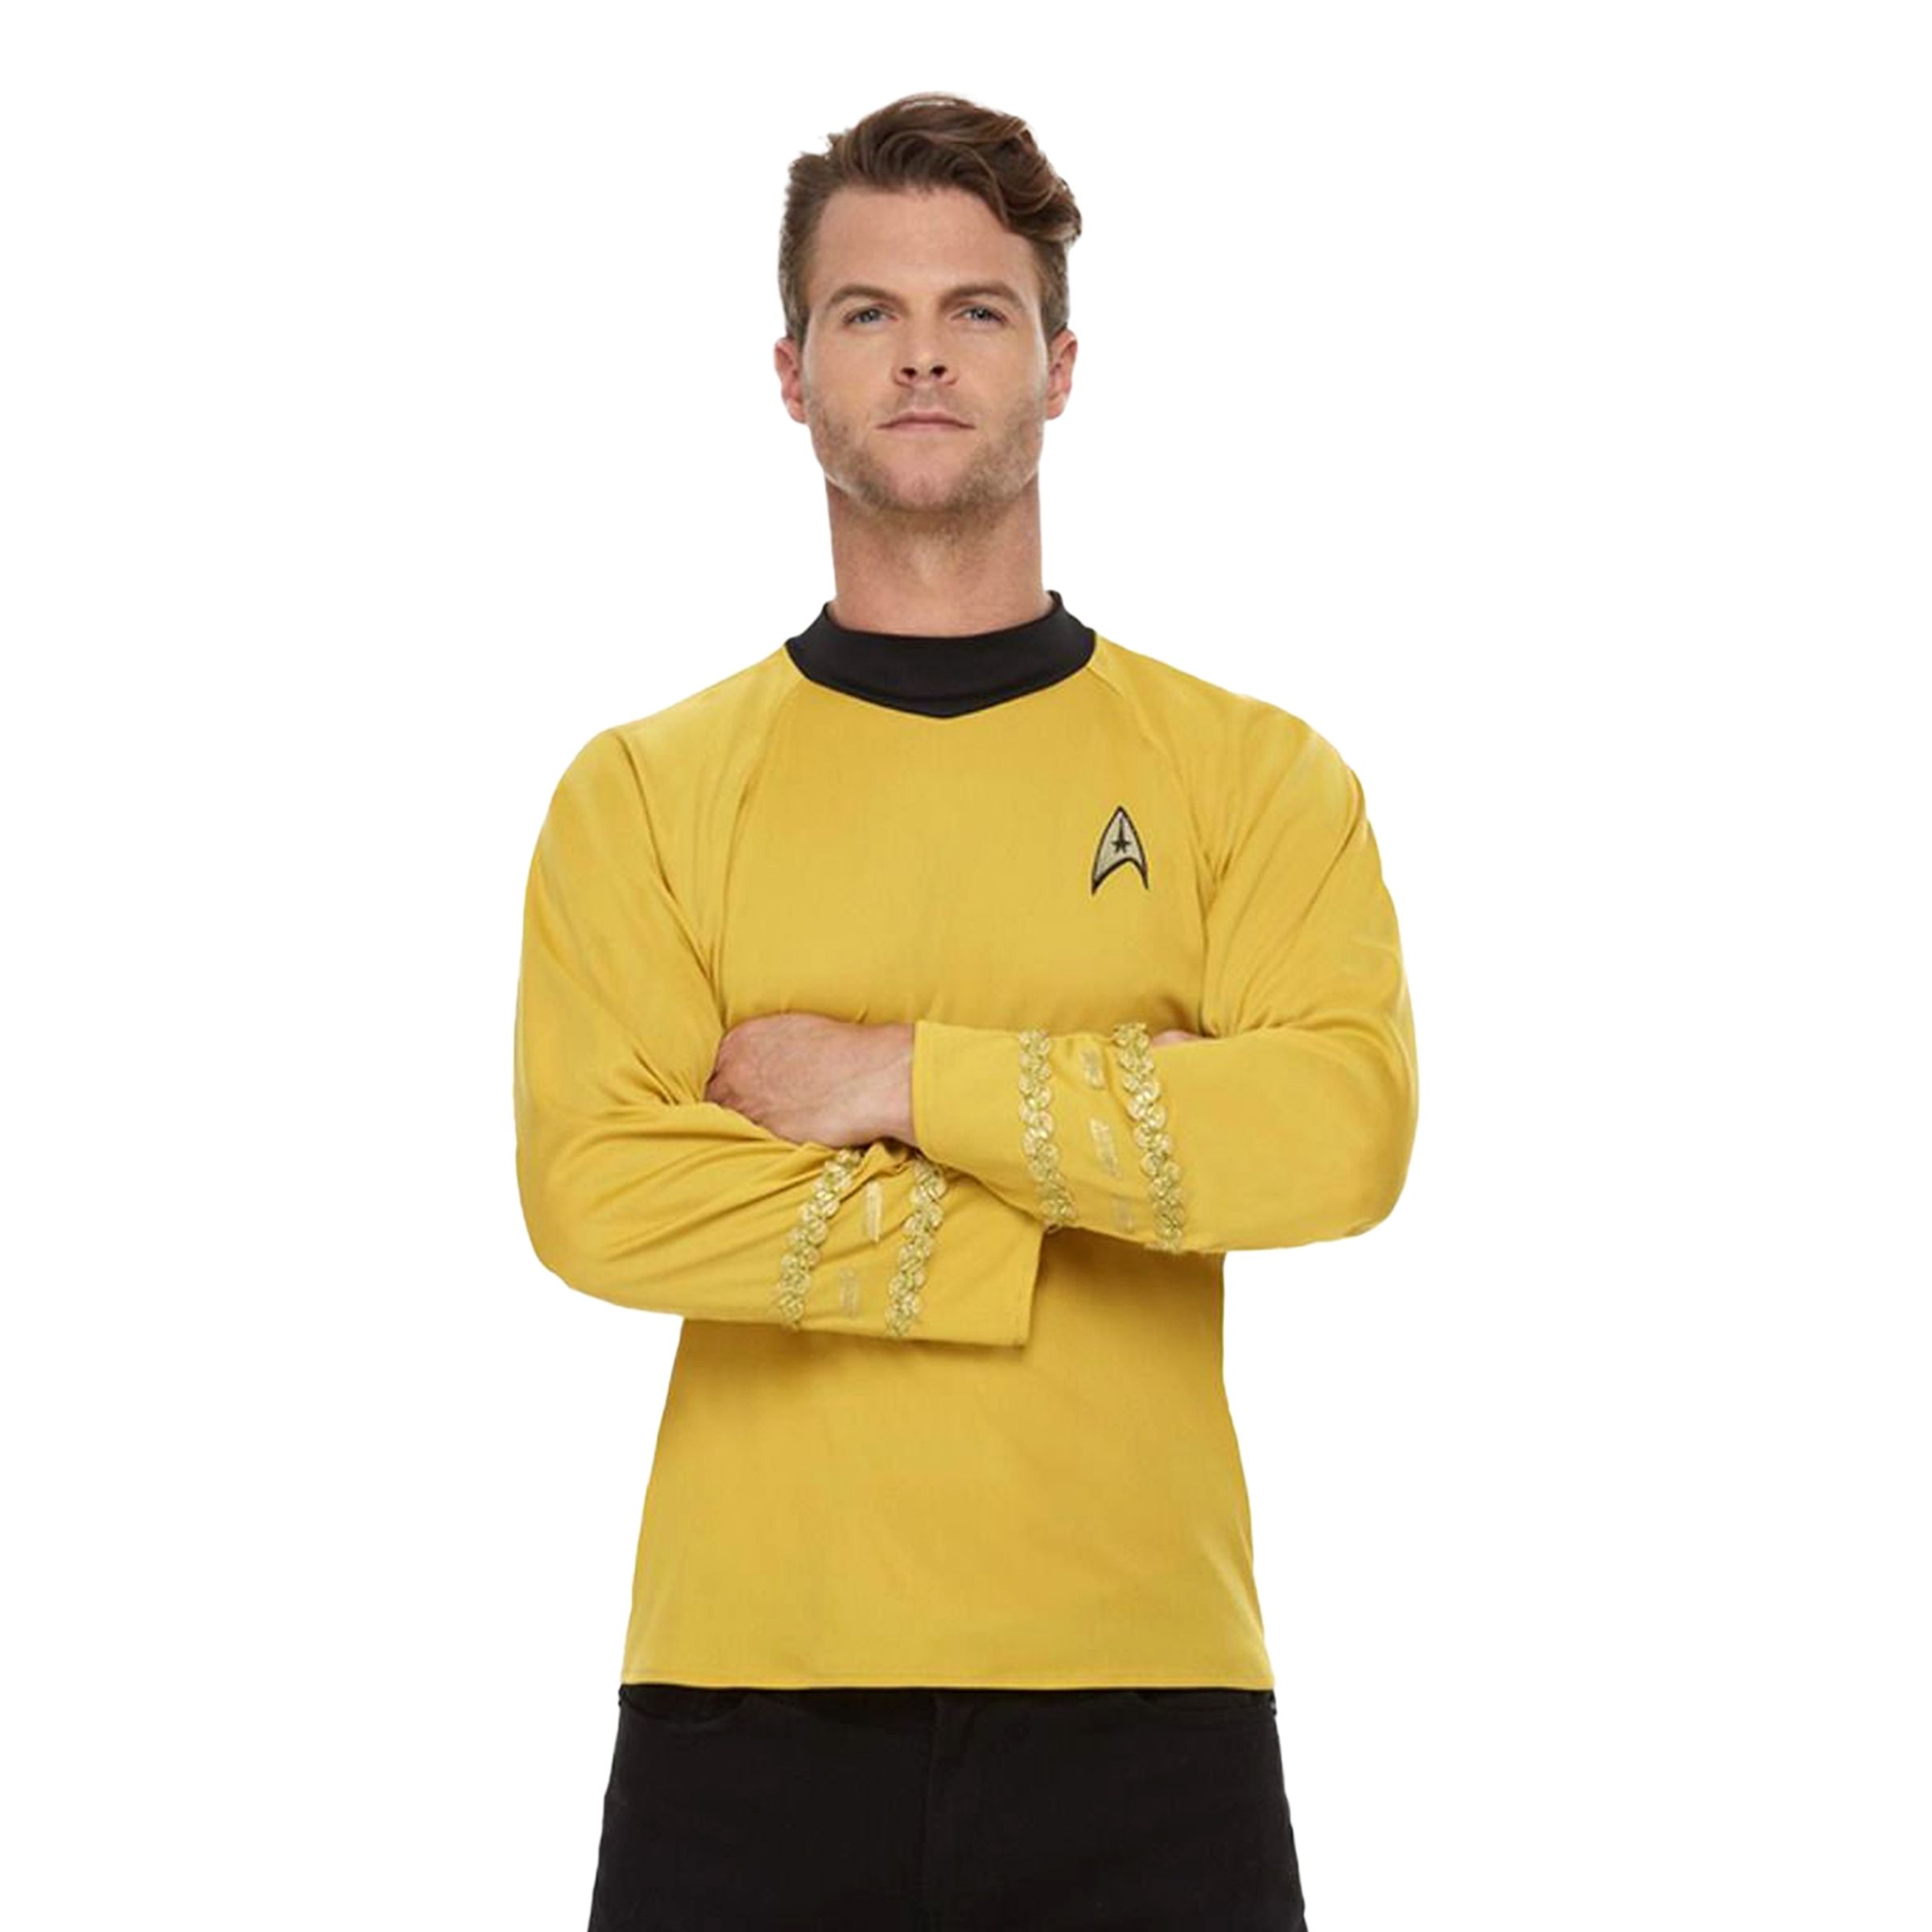 Star Trek Tröja Gul - X-Large